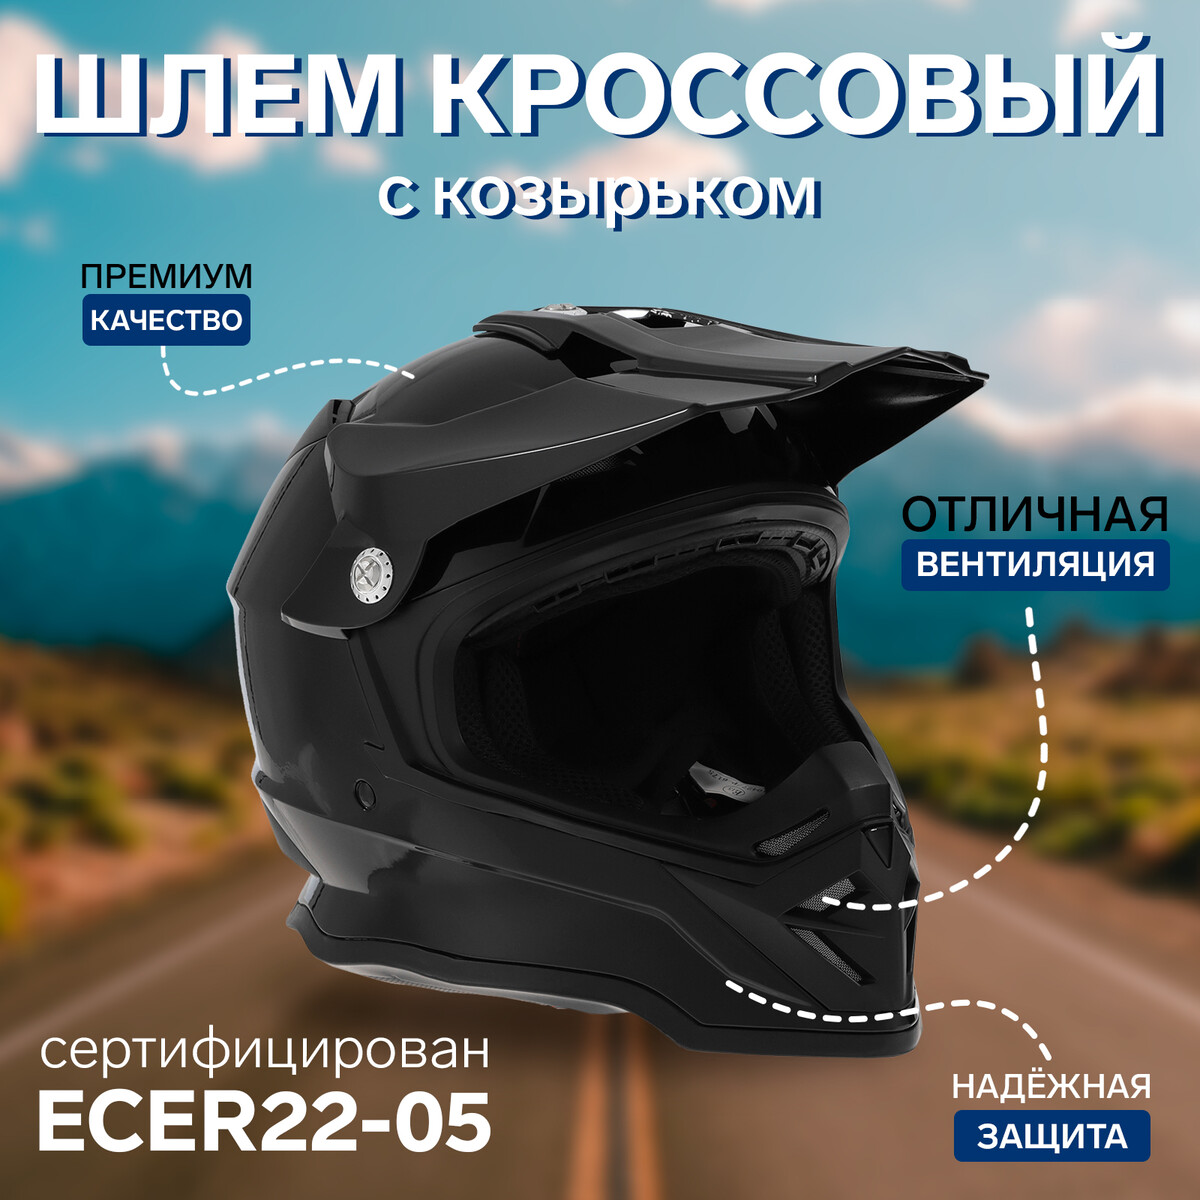 Шлем кроссовый, размер m (57-58), модель - bld-819-7, черный глянцевый